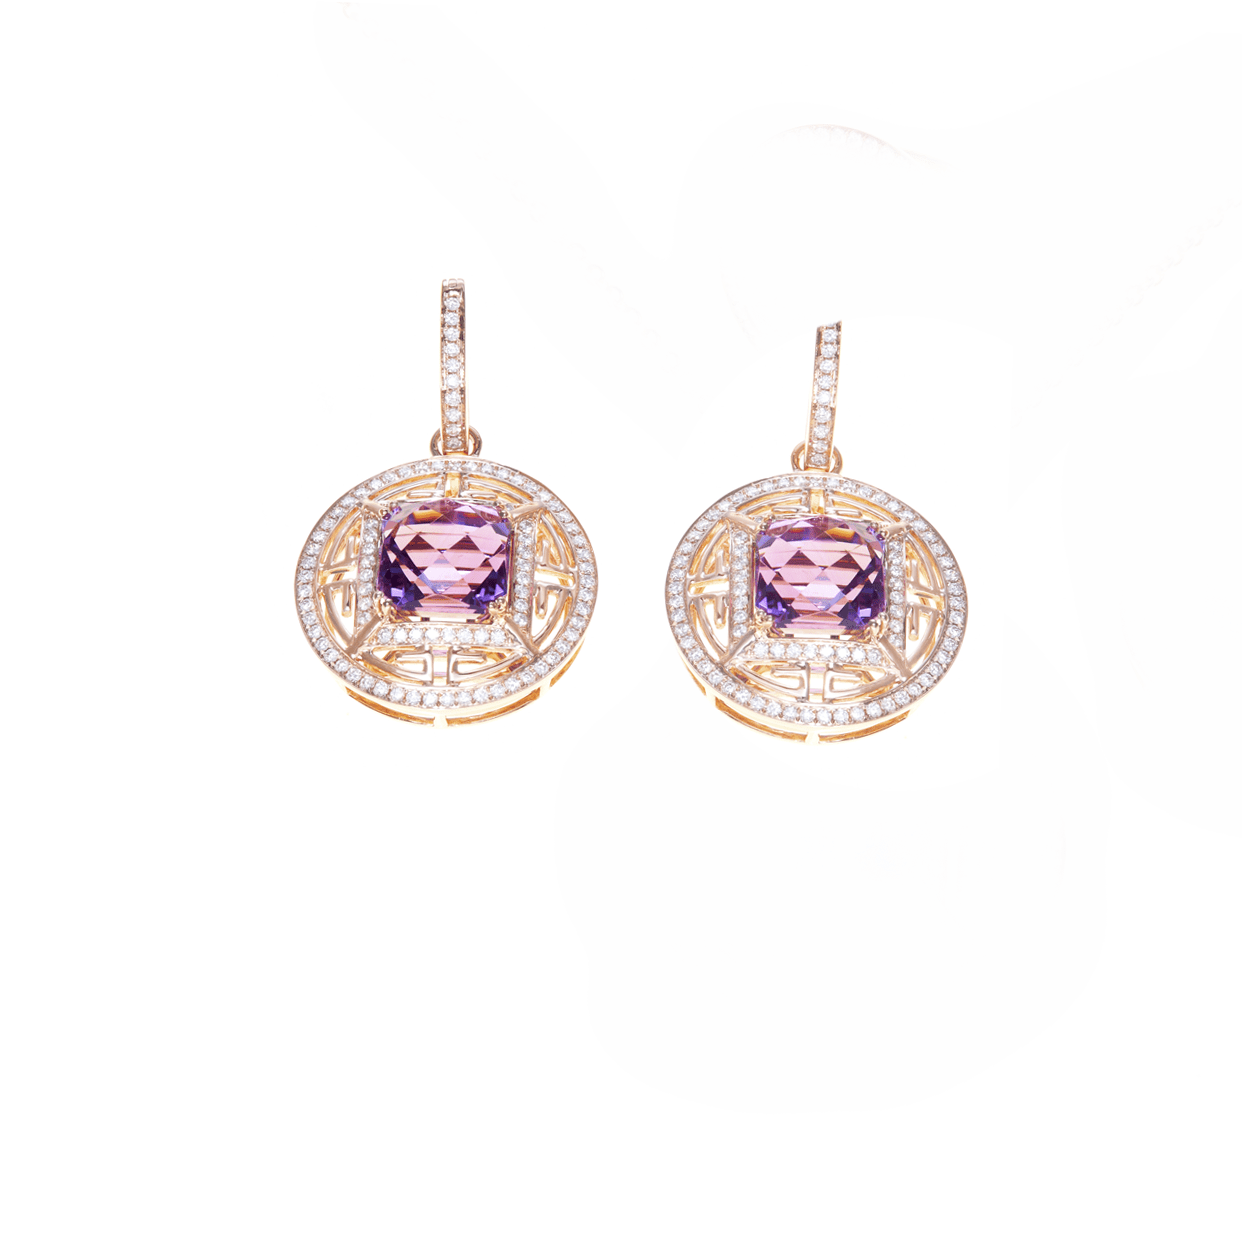 Women’s Earrings - Chameleon Earrings - 18-Karat Solid Amber Hue Gold and Amethyst Gemstone